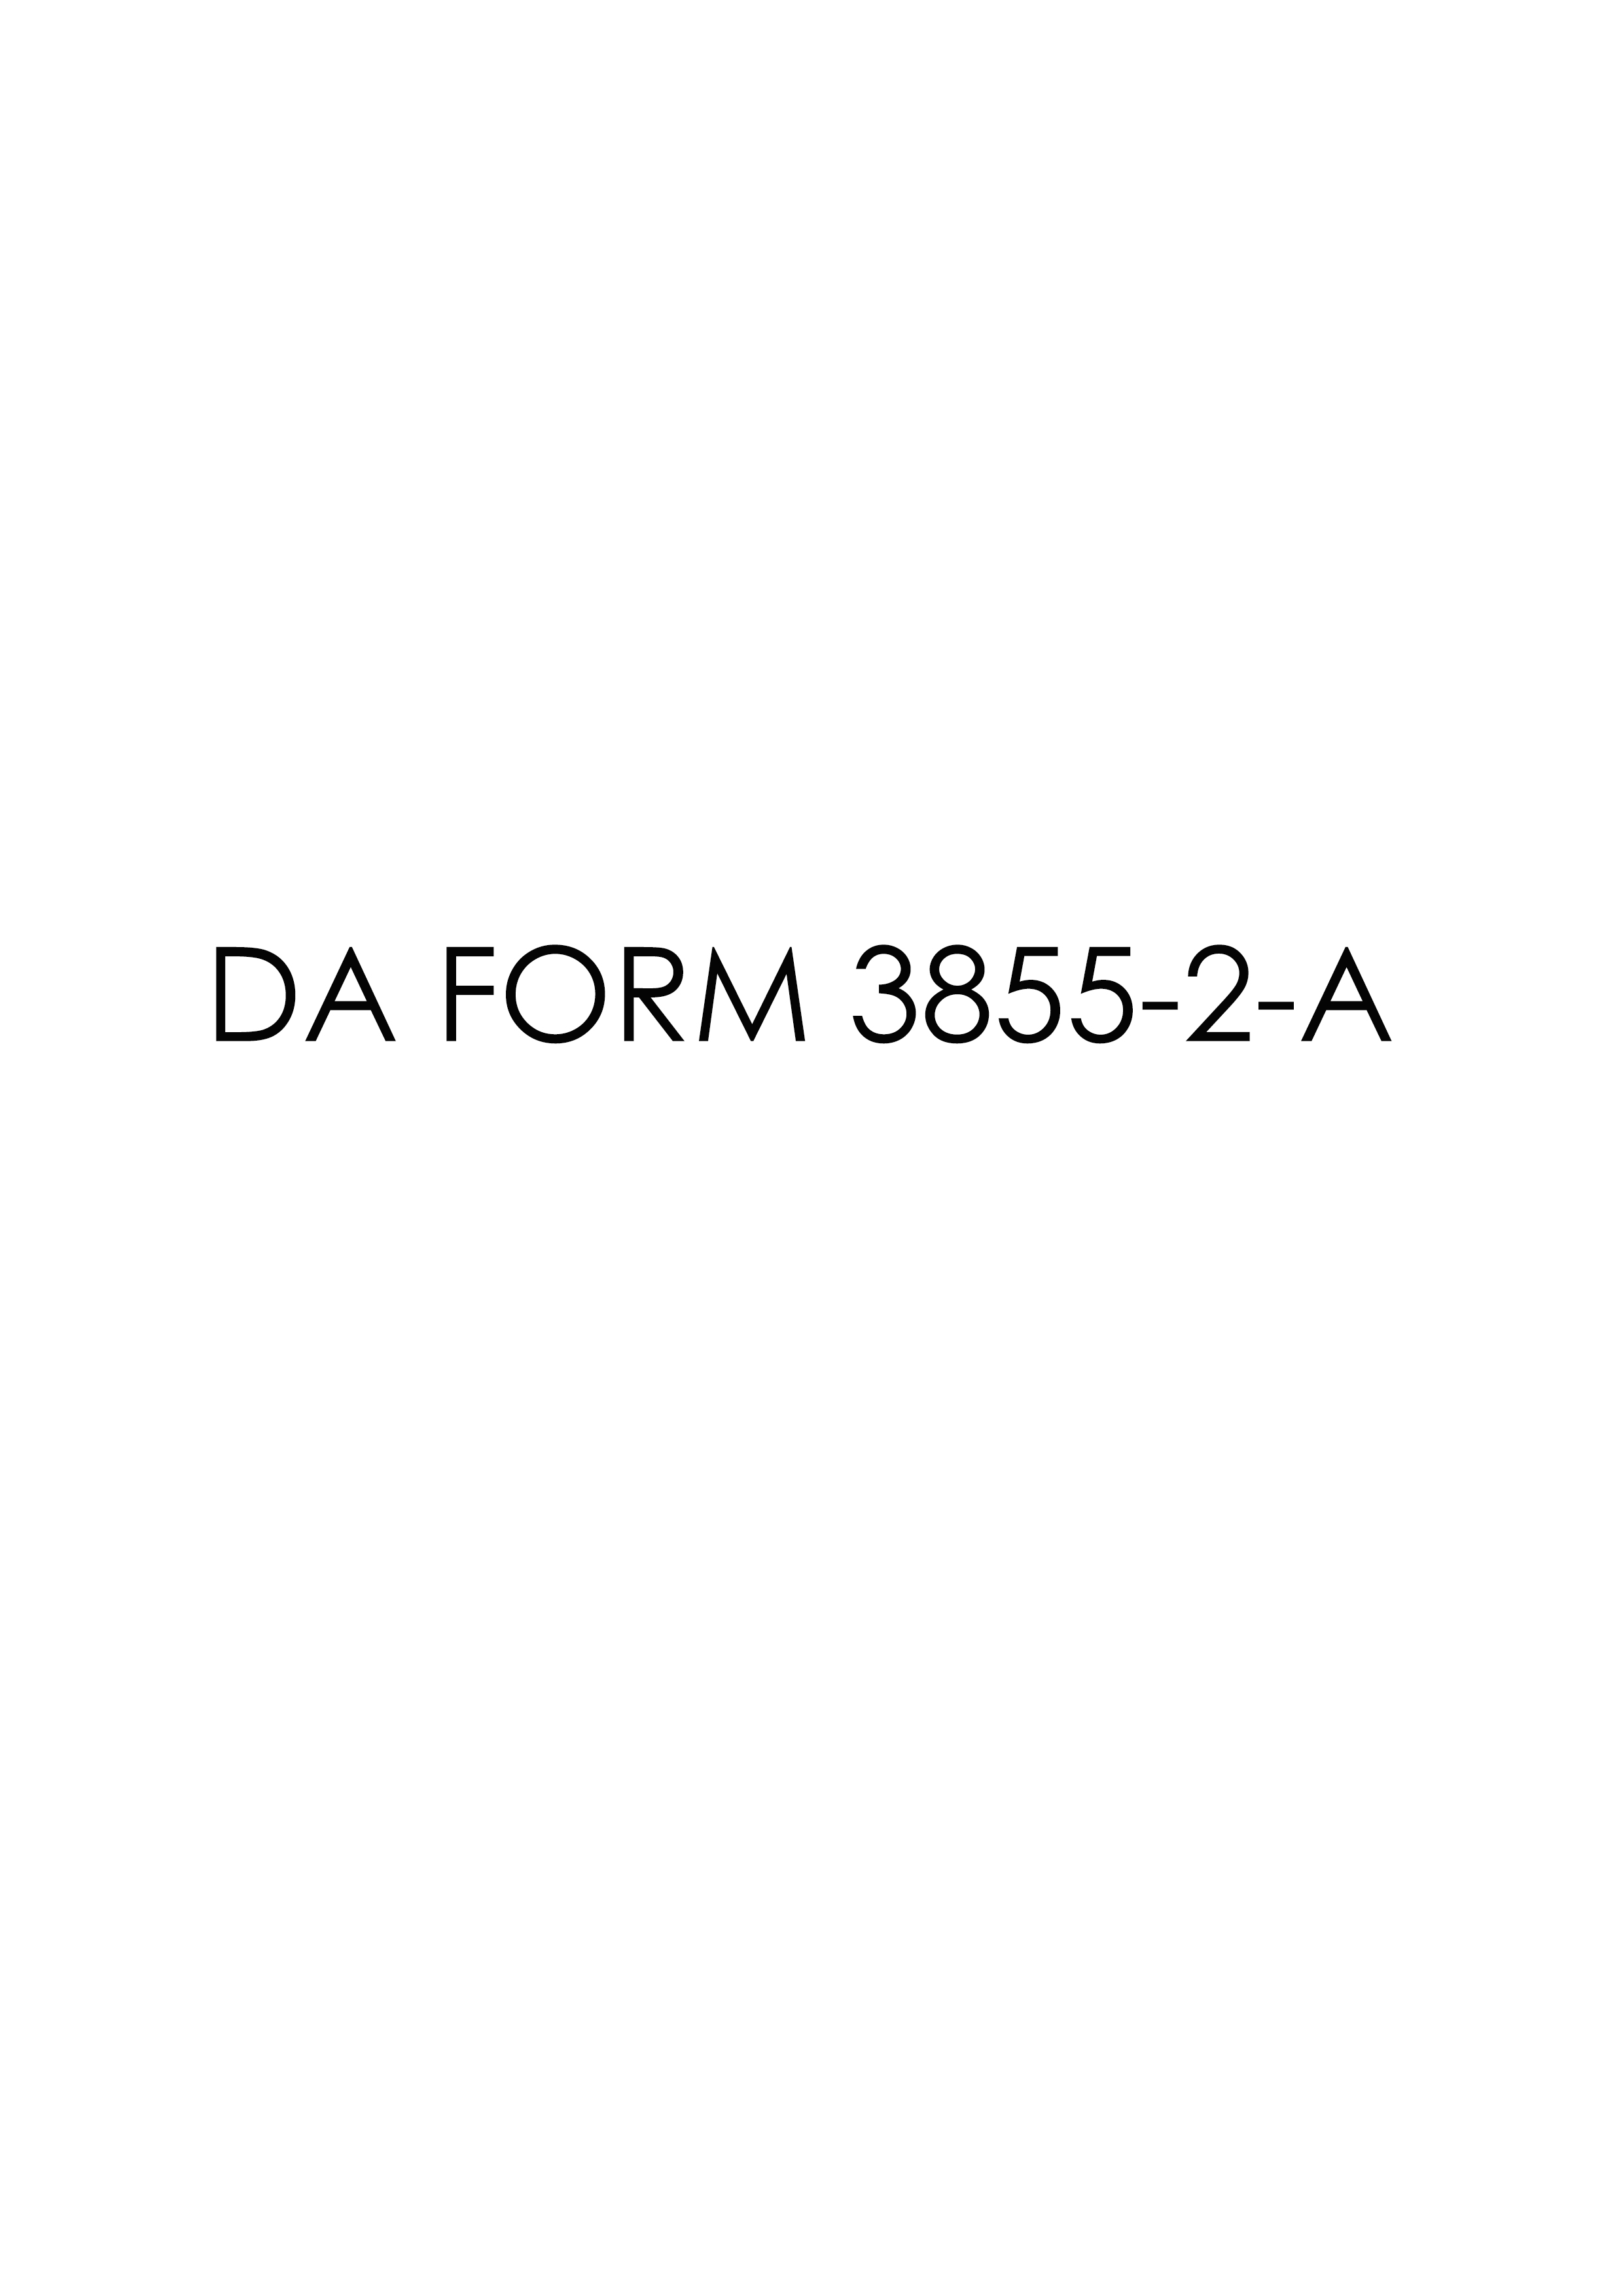 da Form 3855-2-A fillable